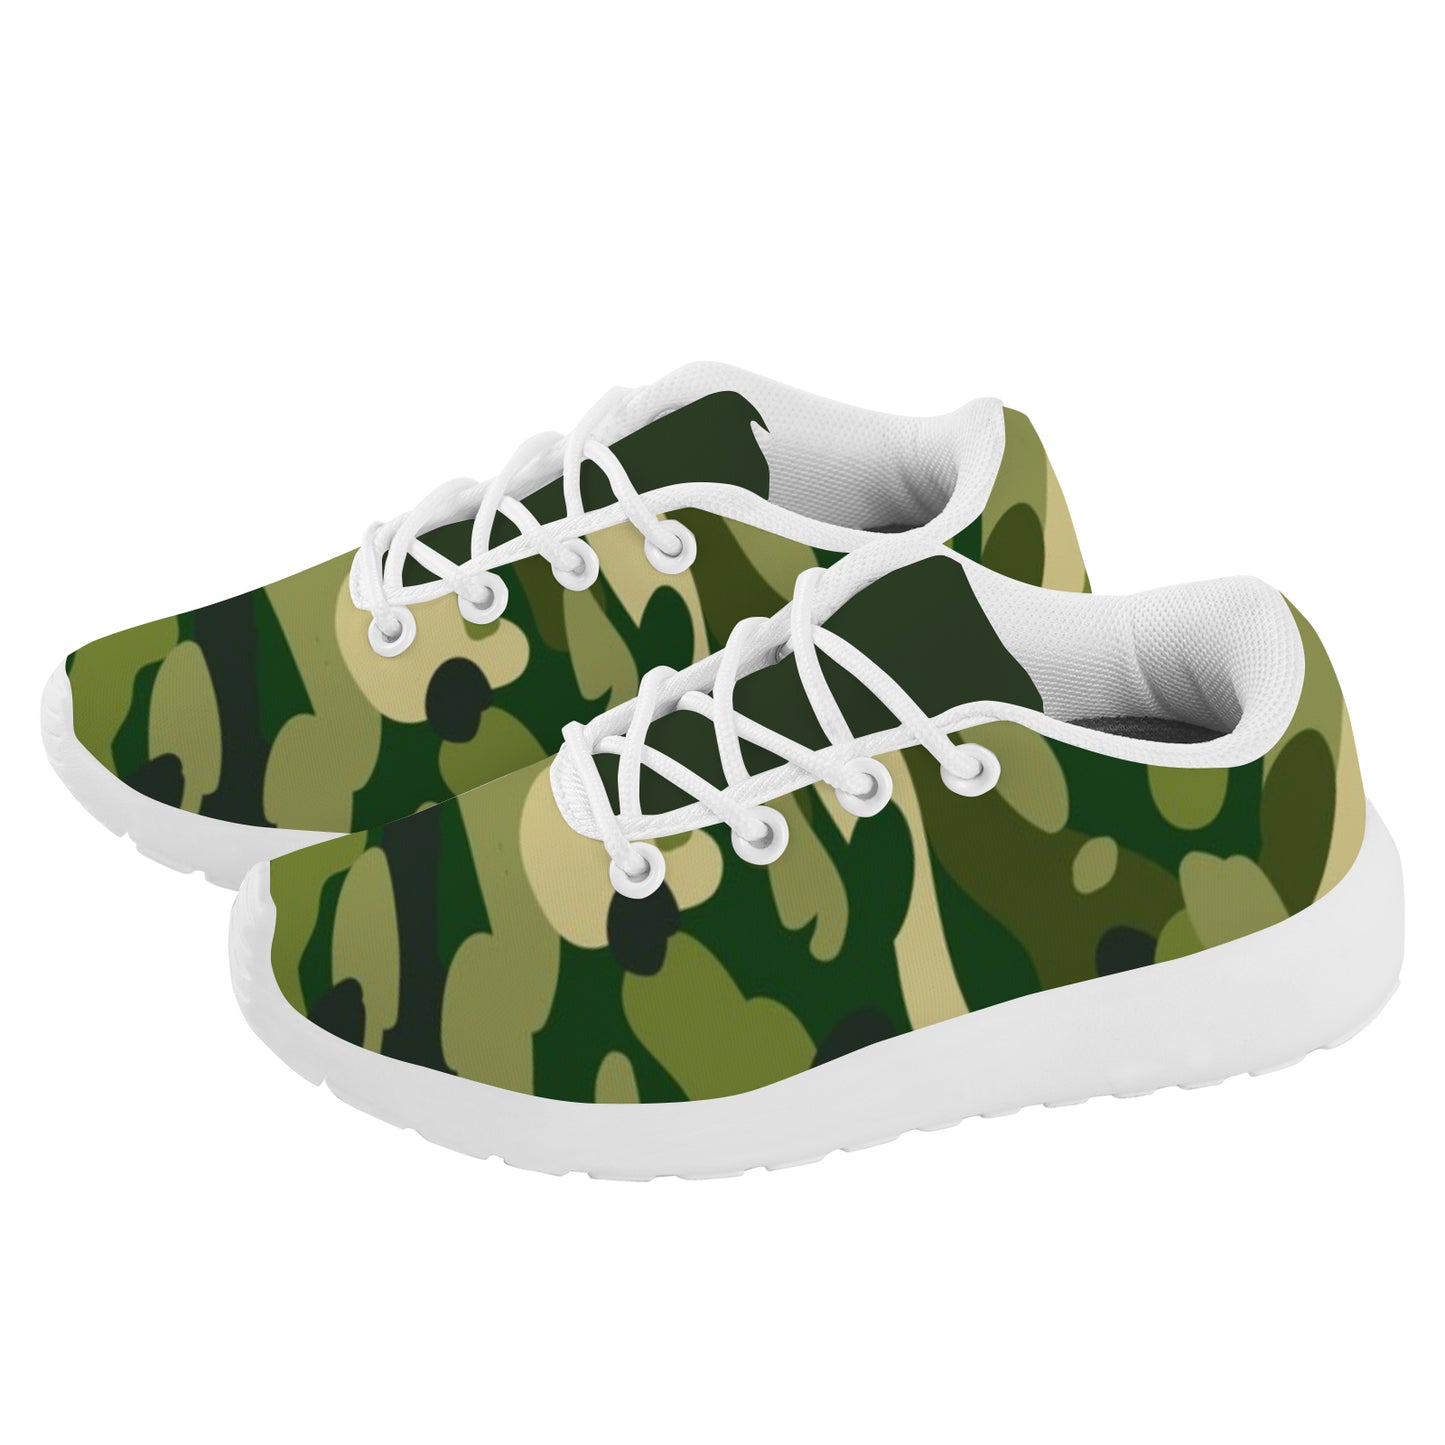 Kid's Sneakers - Green Camoflauge